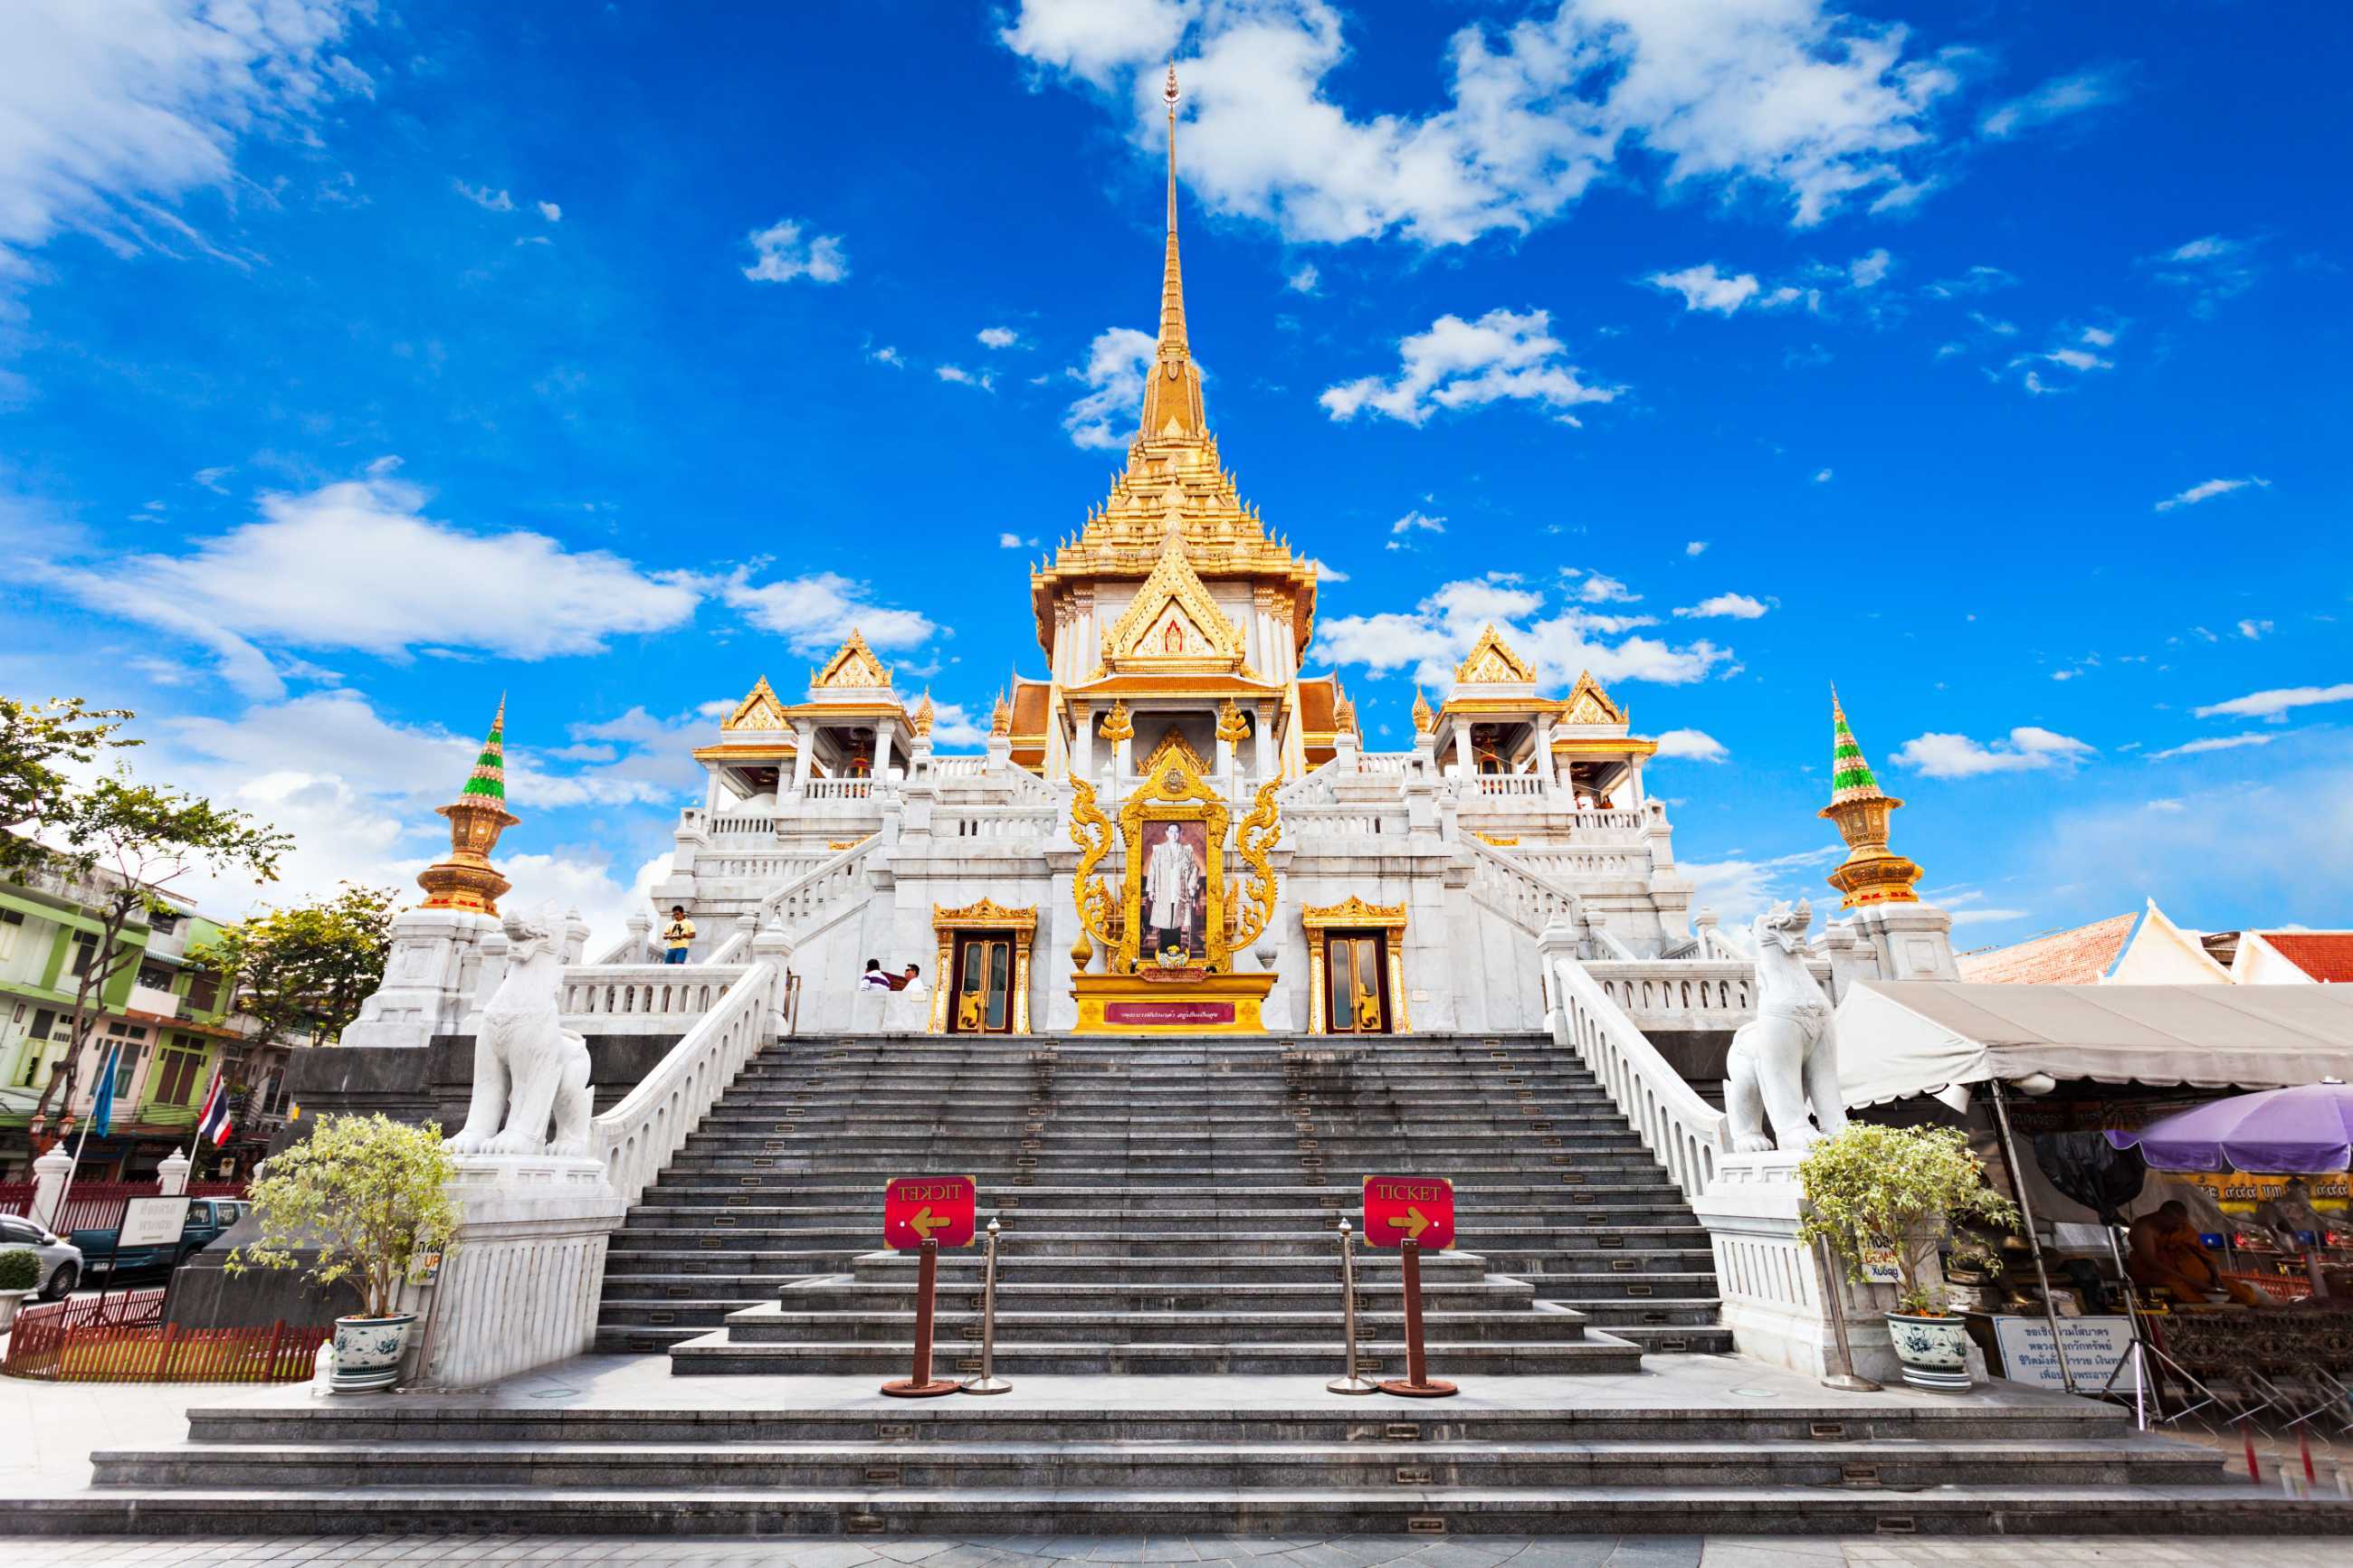 Bangkok-Wat Traimit Wittayaram Worawihan is dedicated to the Golden Buddha